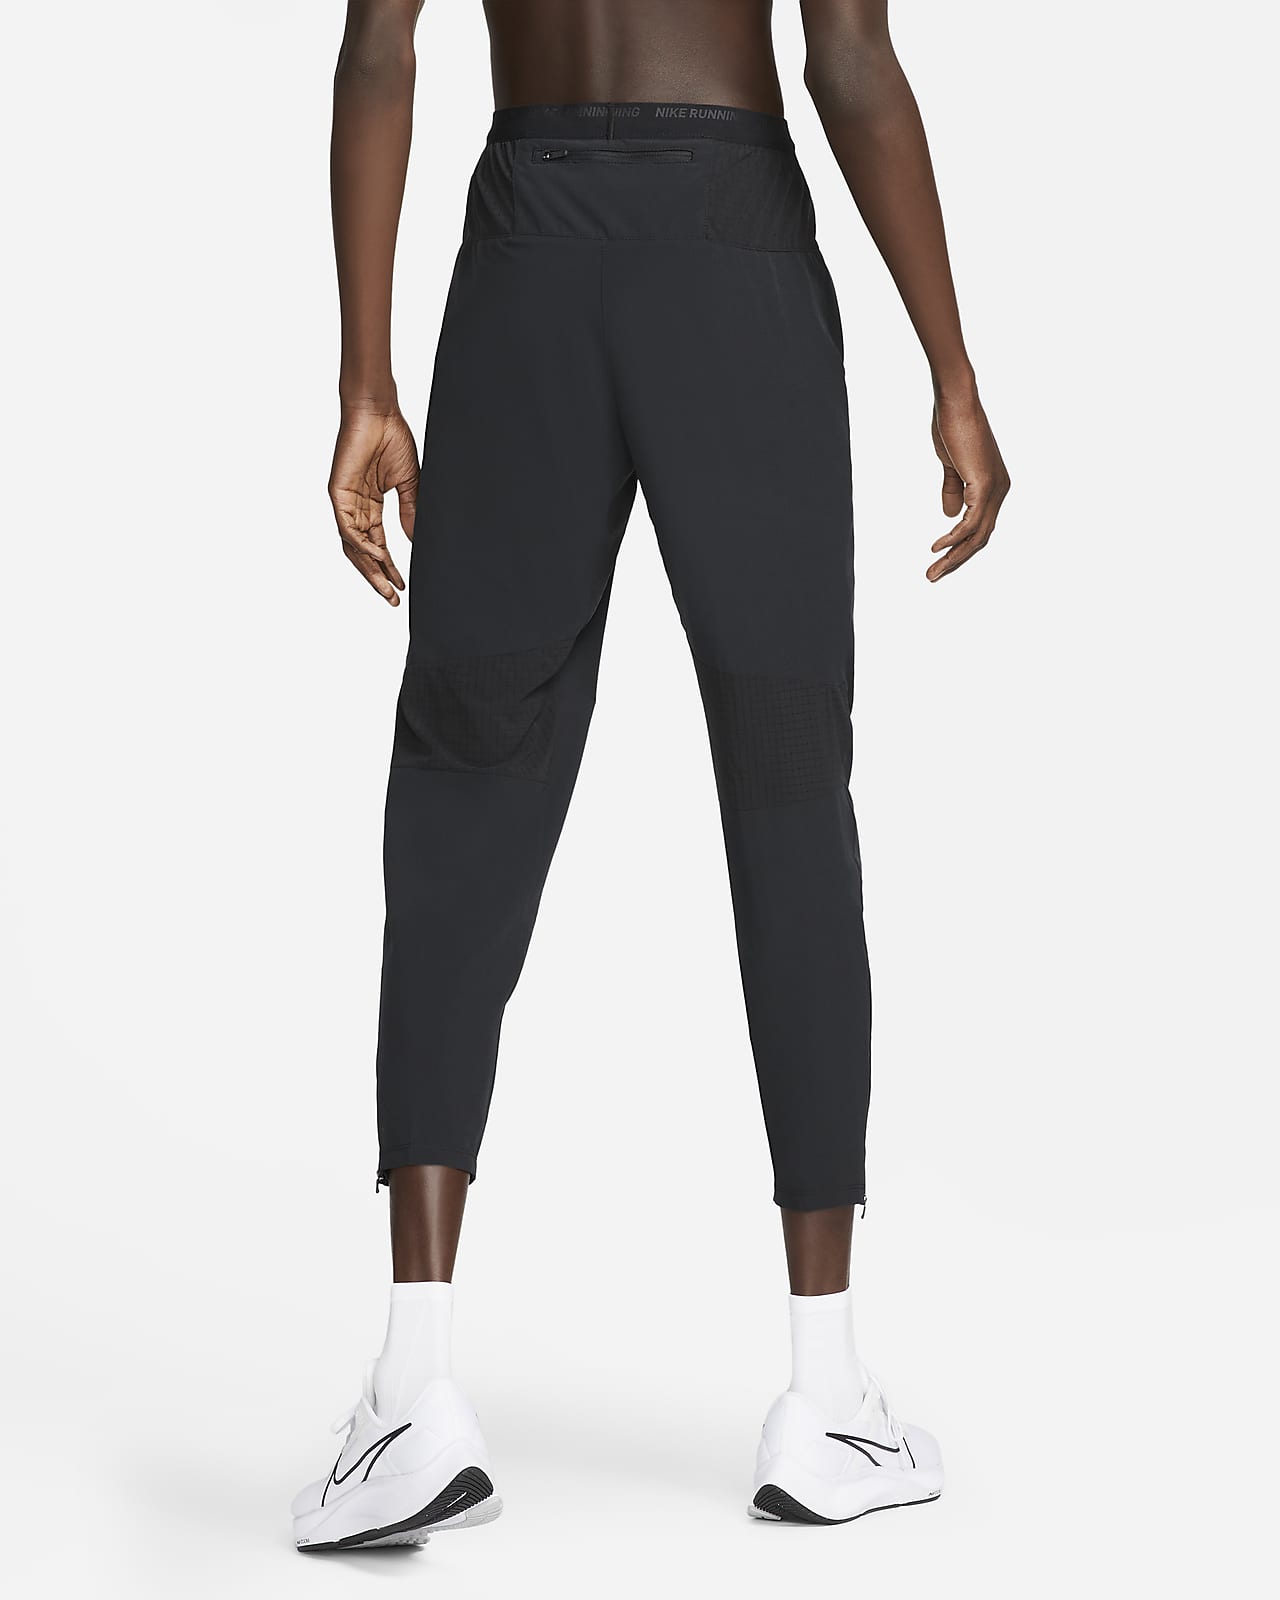 Nike Dri-Fit Phenom Elite Knit Running Pants - Running tights